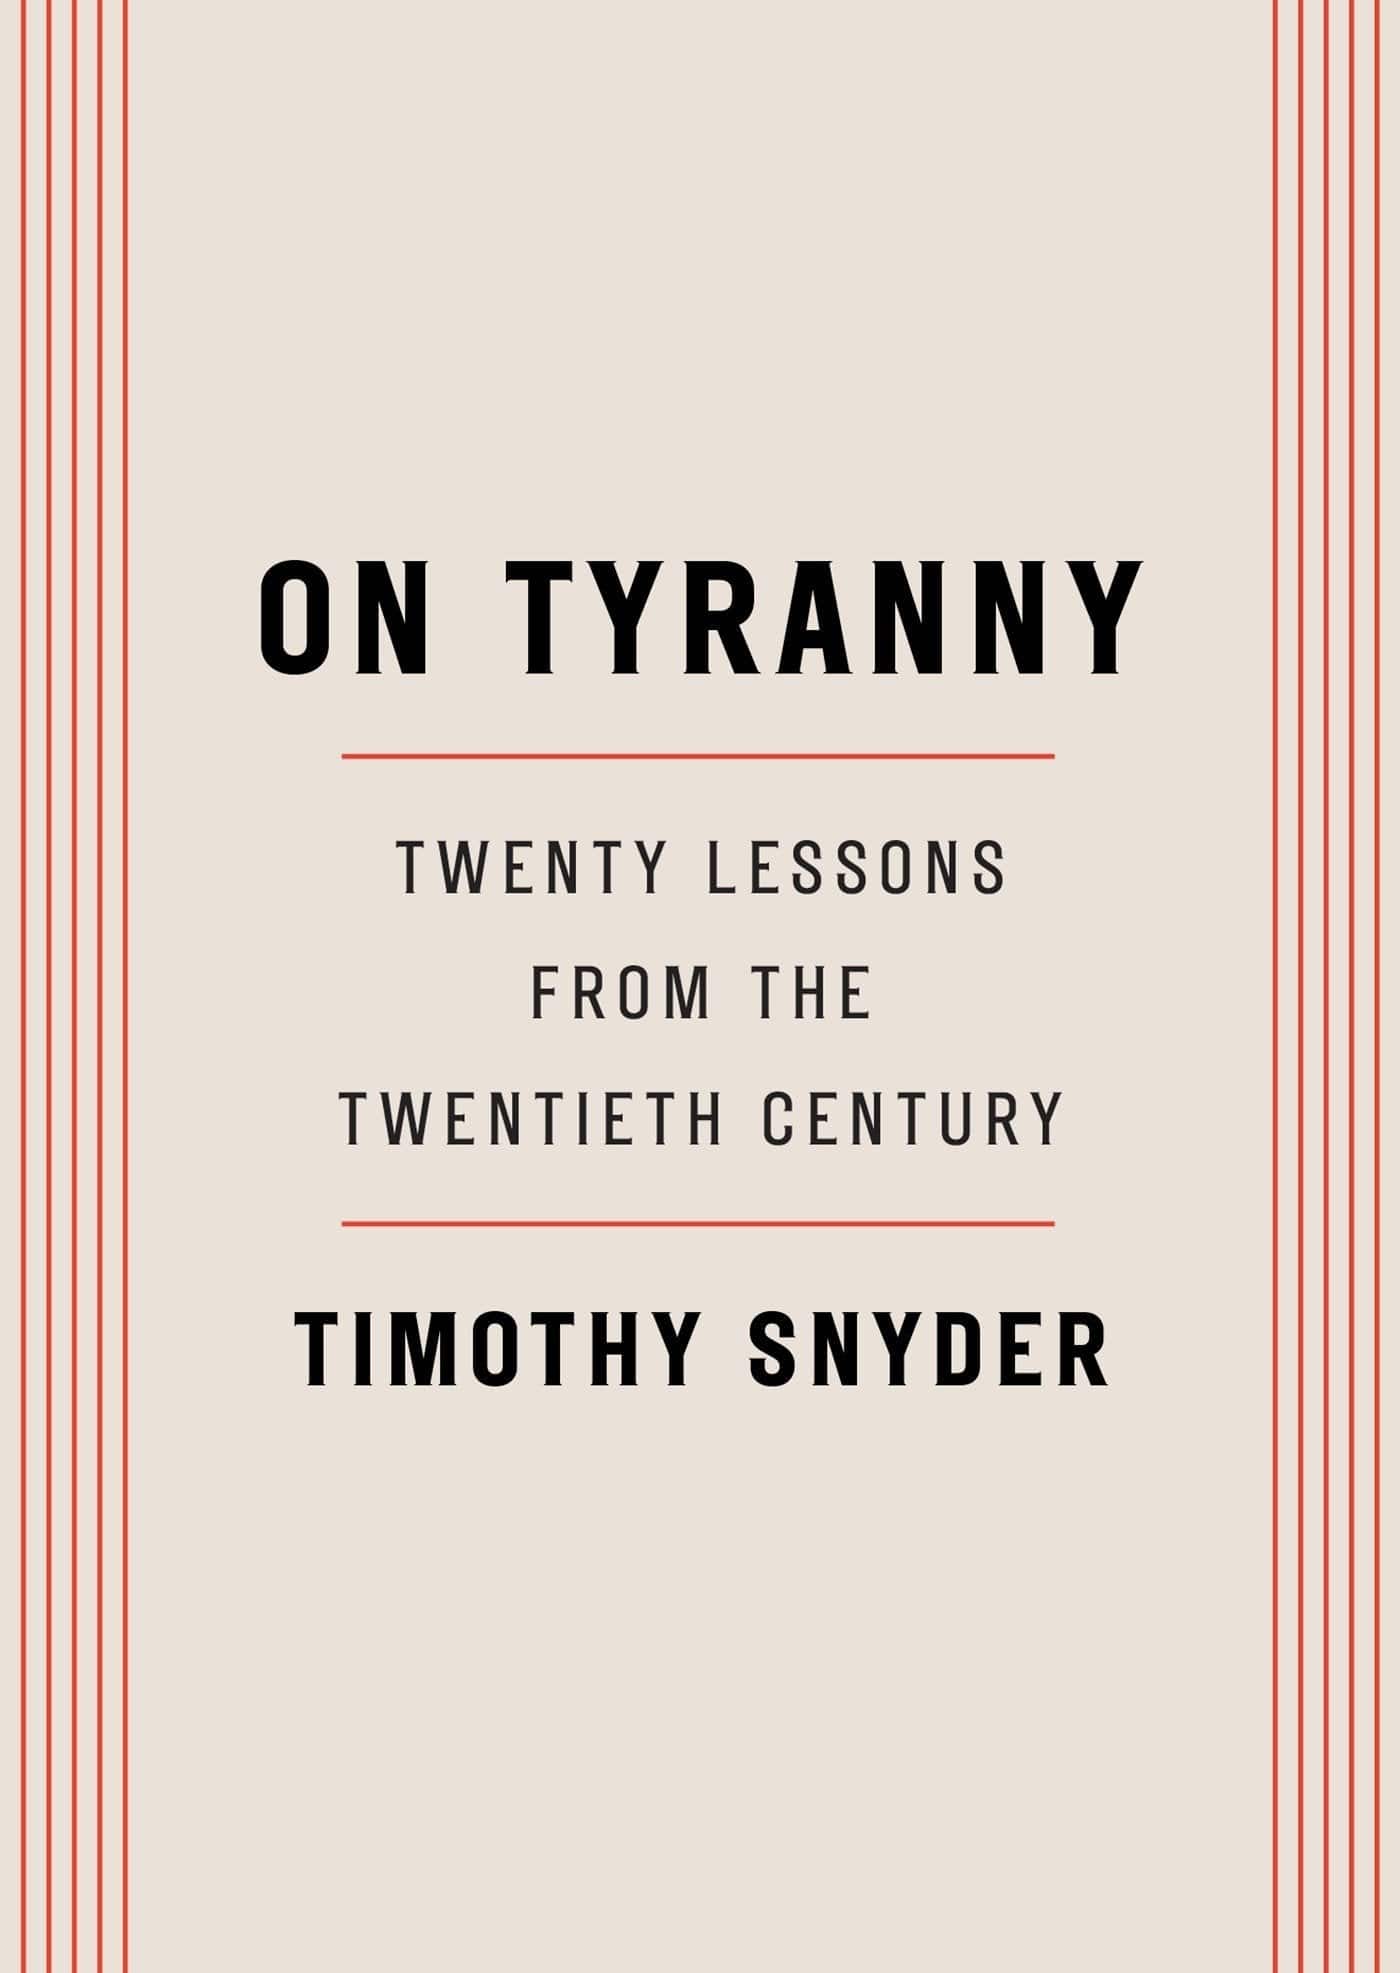 On Tyranny: Twenty Lessons from the Twentieth Century - Third Eye